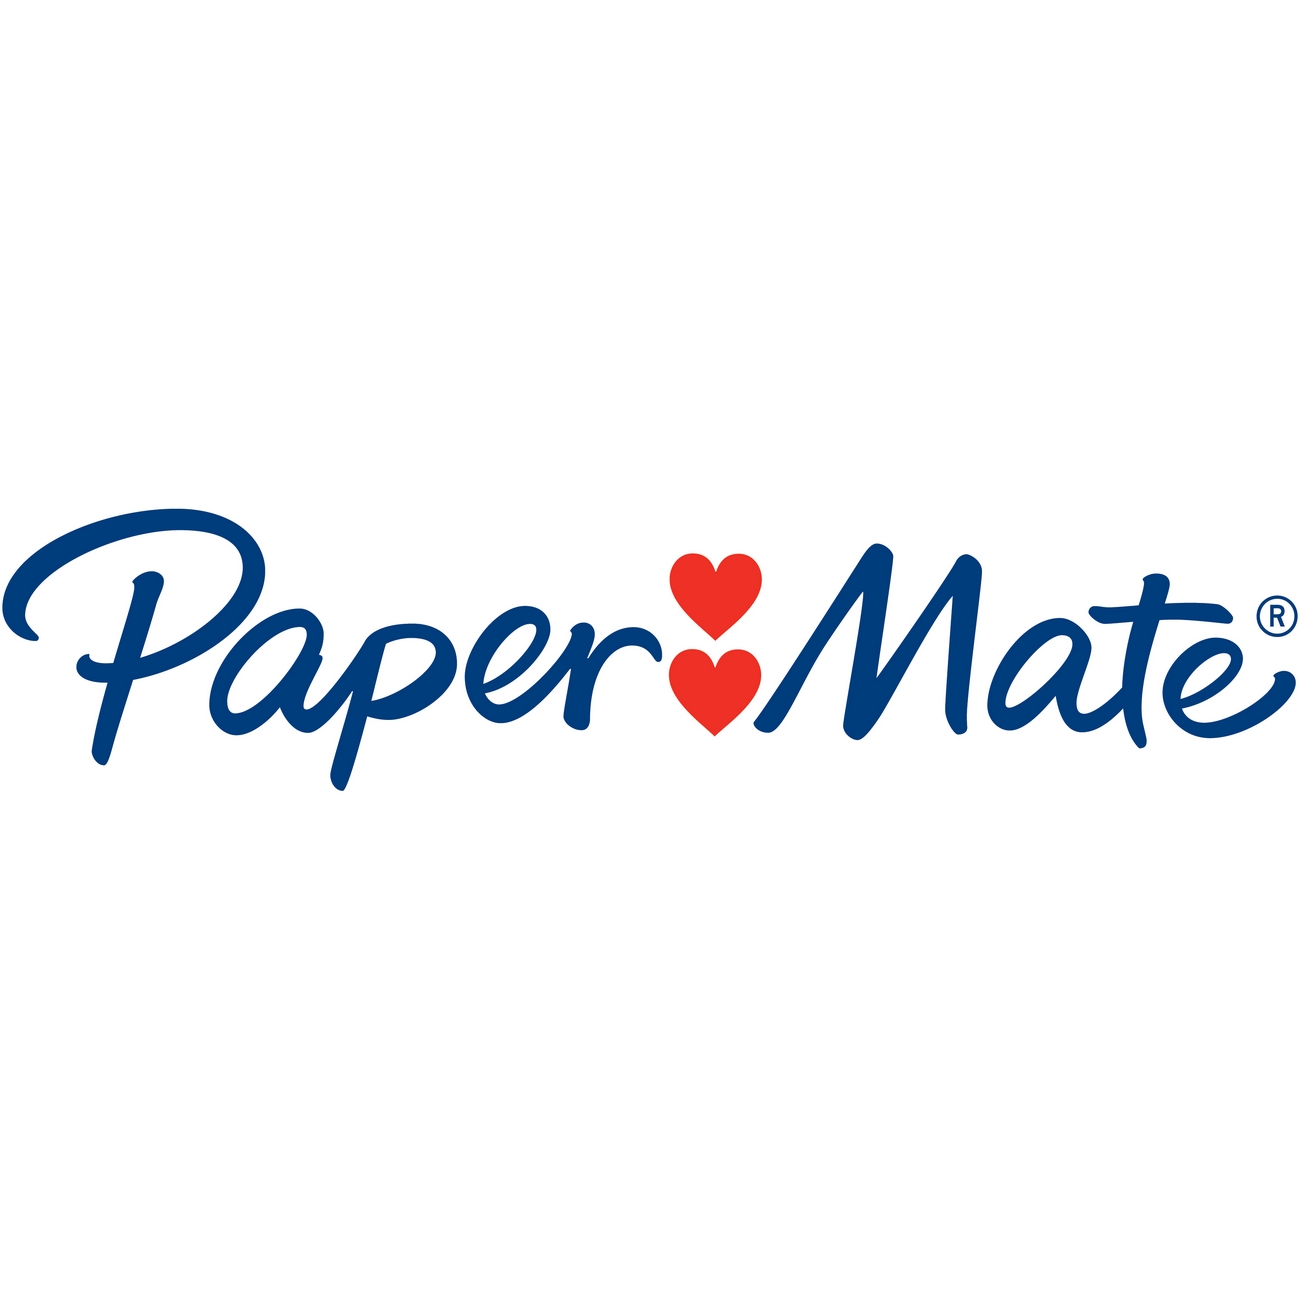 paper_mate